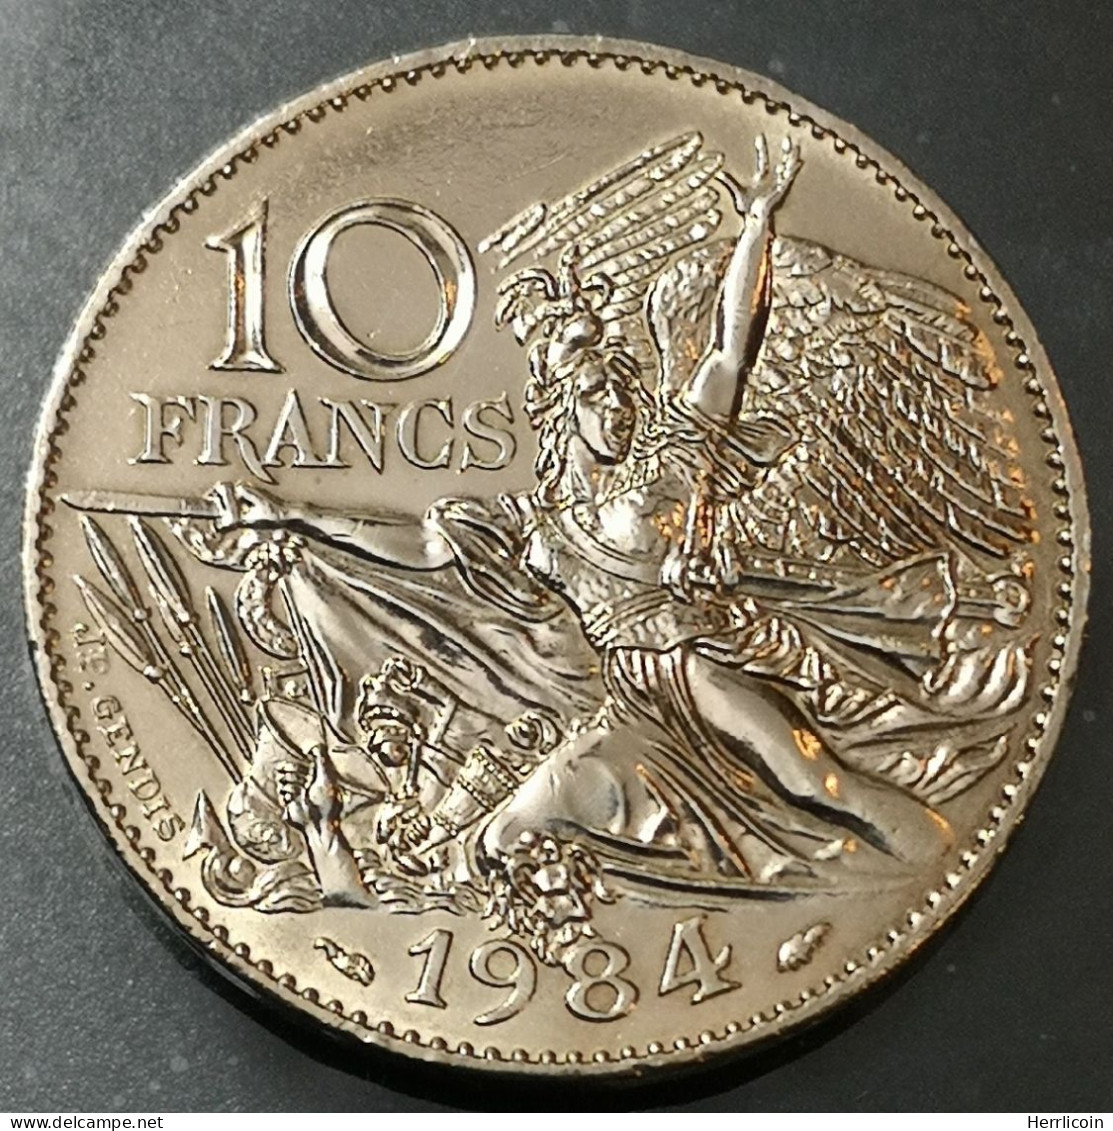 Monnaie France - 1984 - 10 Francs François Rude - Tranche A - Herdenking